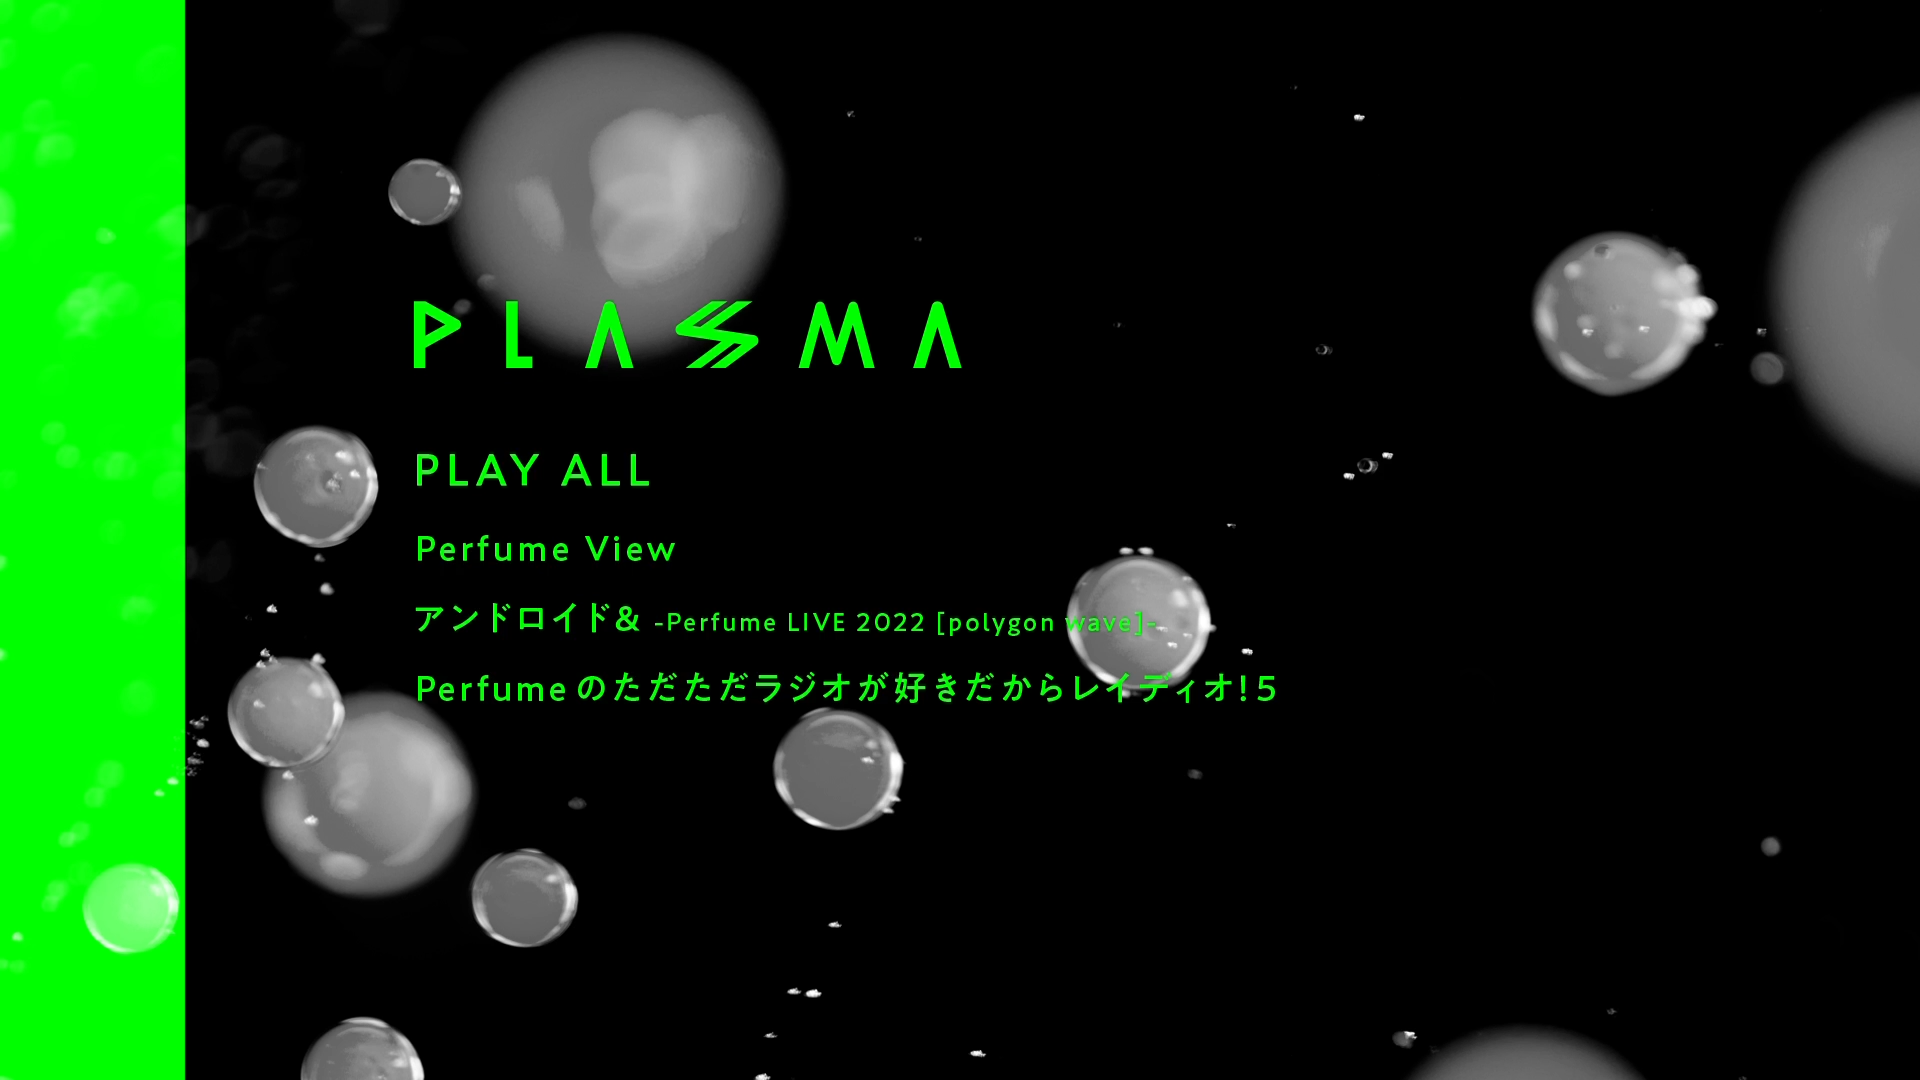 20220730.0911.3 Perfume - Plasma (2022) (Blu-Ray 2) (JPOP.ru) menu.png